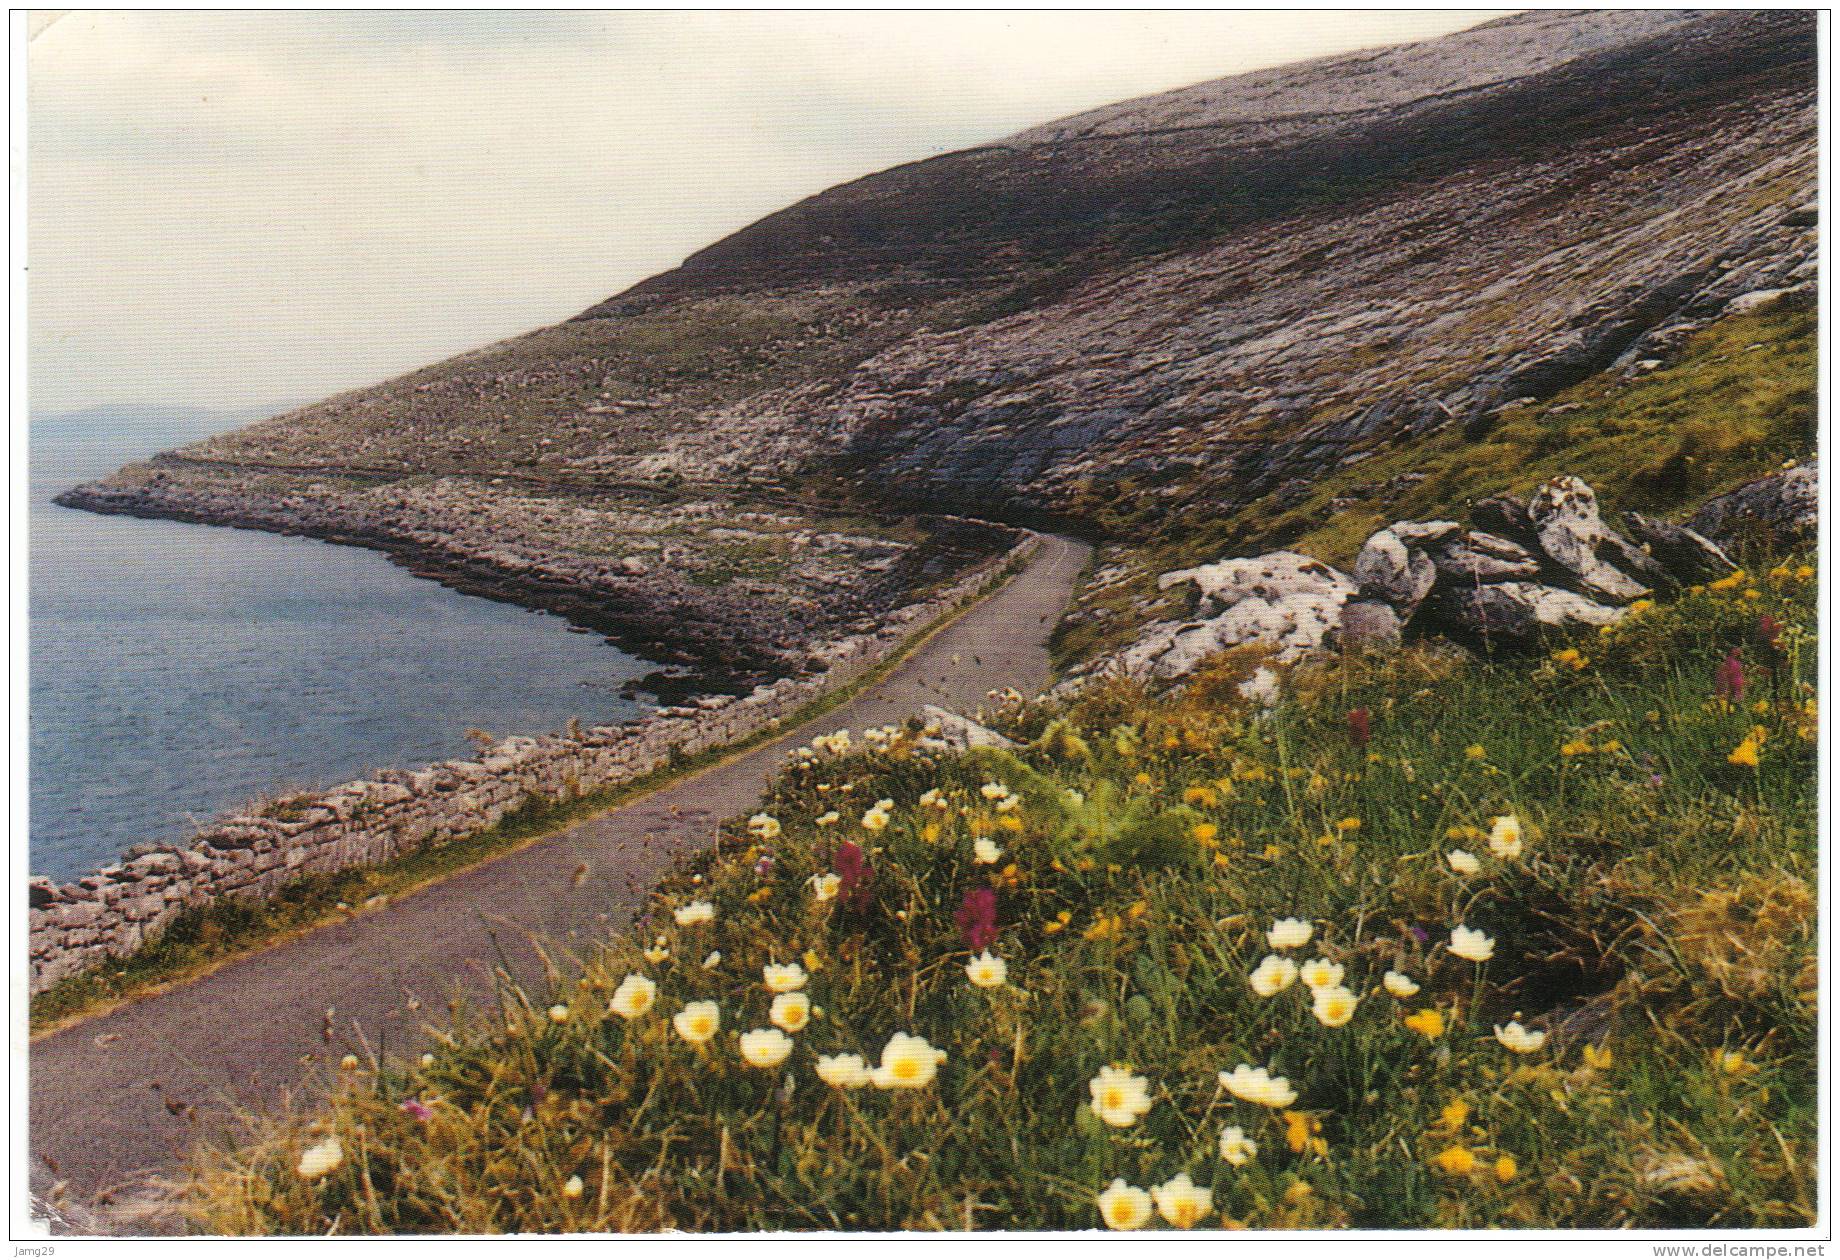 Ierland/Ireland/Éire, The Burren, 1993 - Clare